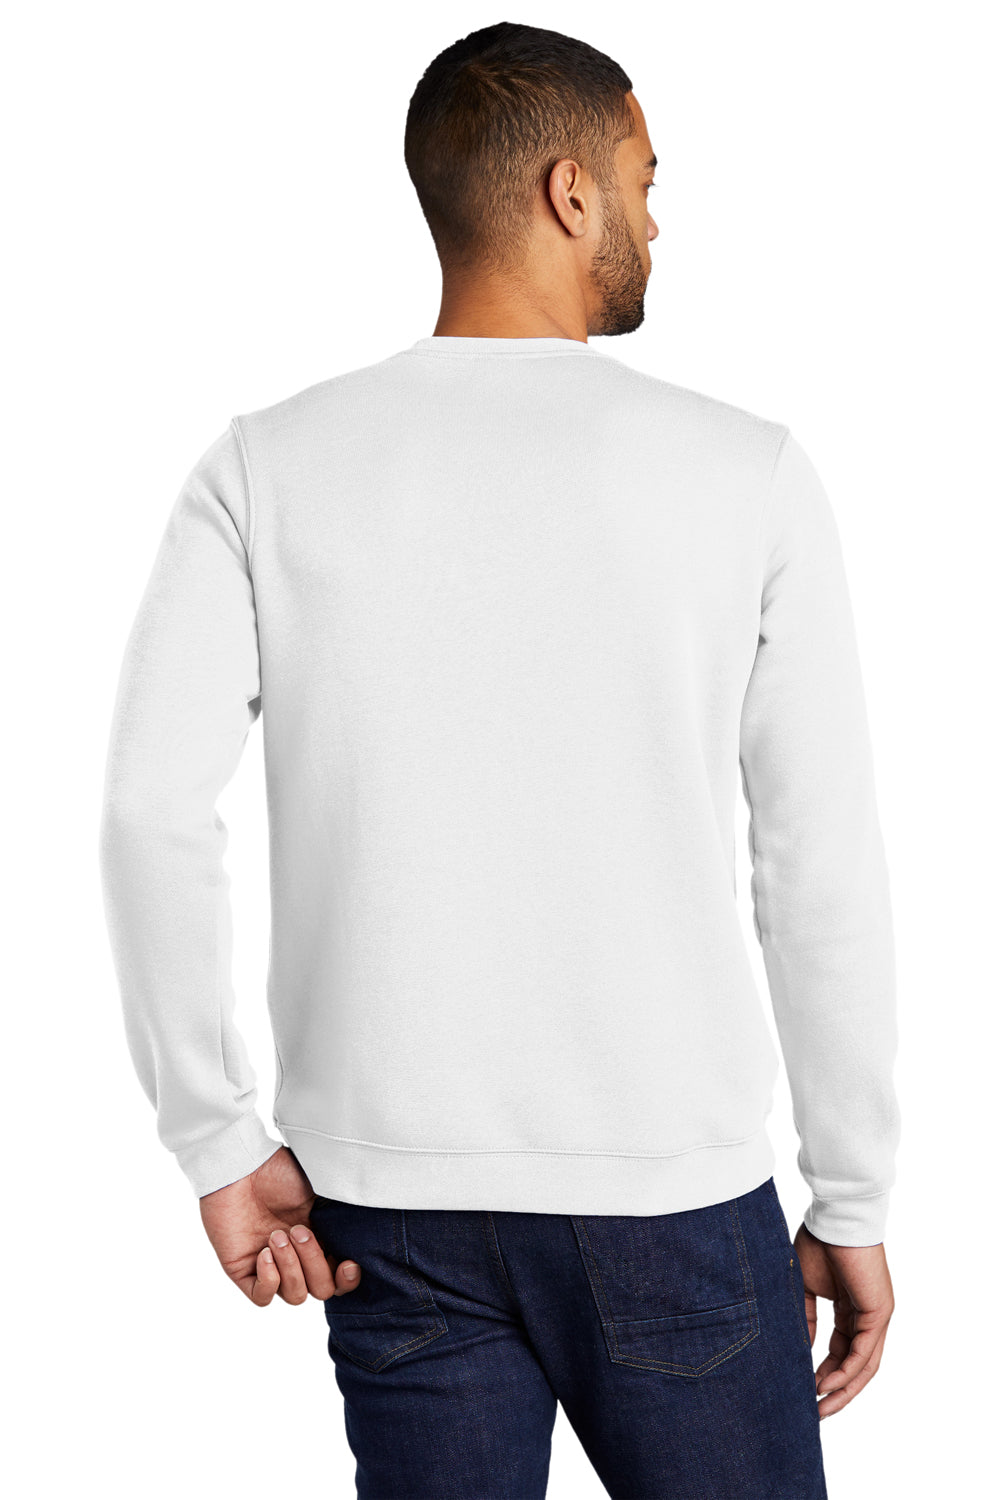 Nike CJ1614 Mens Club Fleece Crewneck Sweatshirt White Model Back